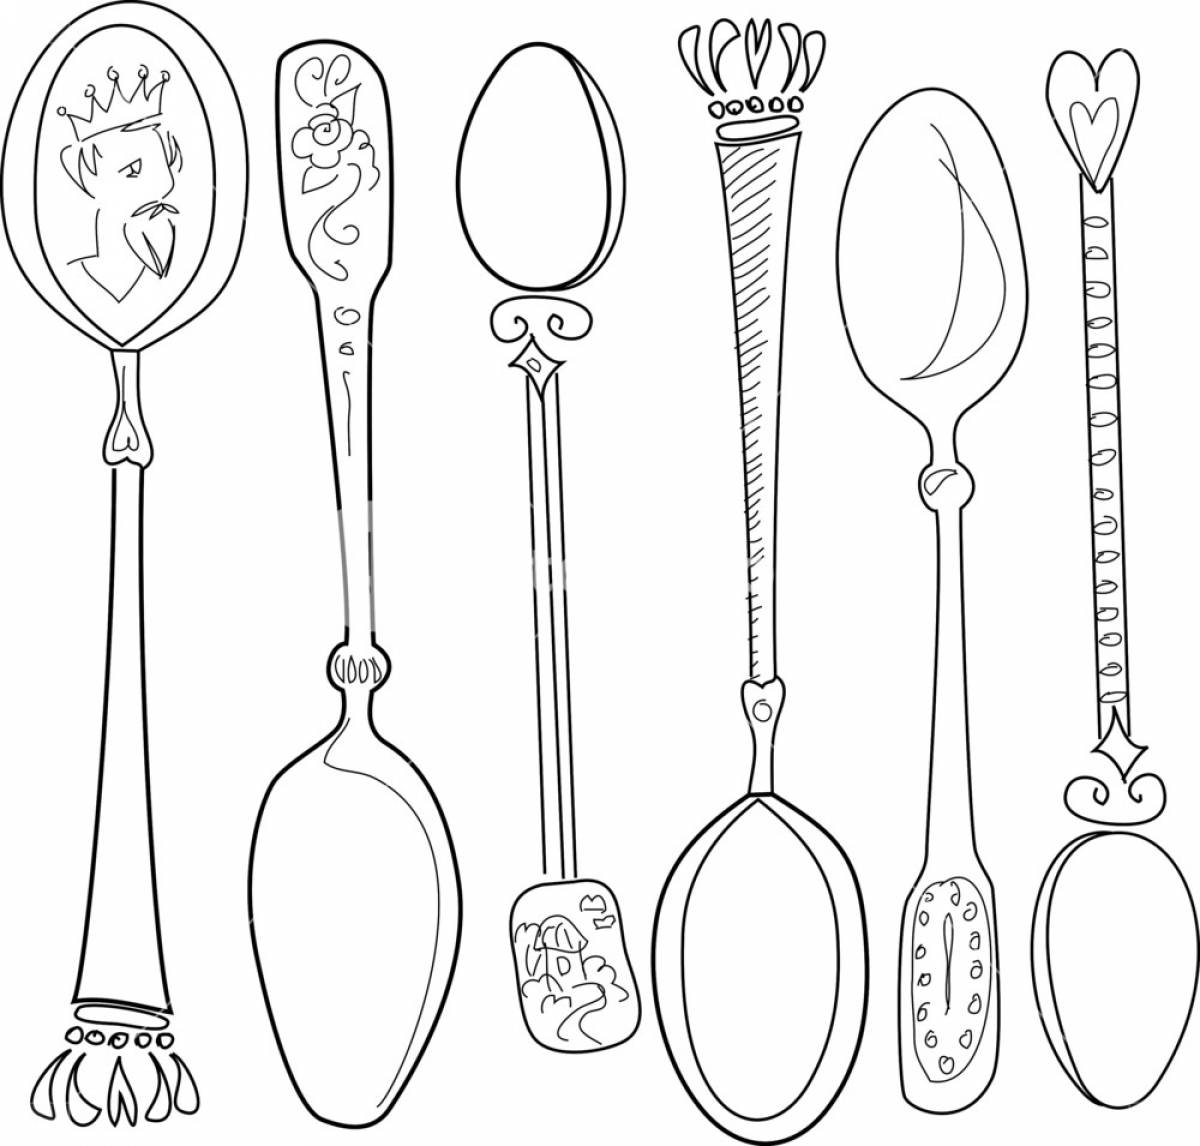 Spoon drawing